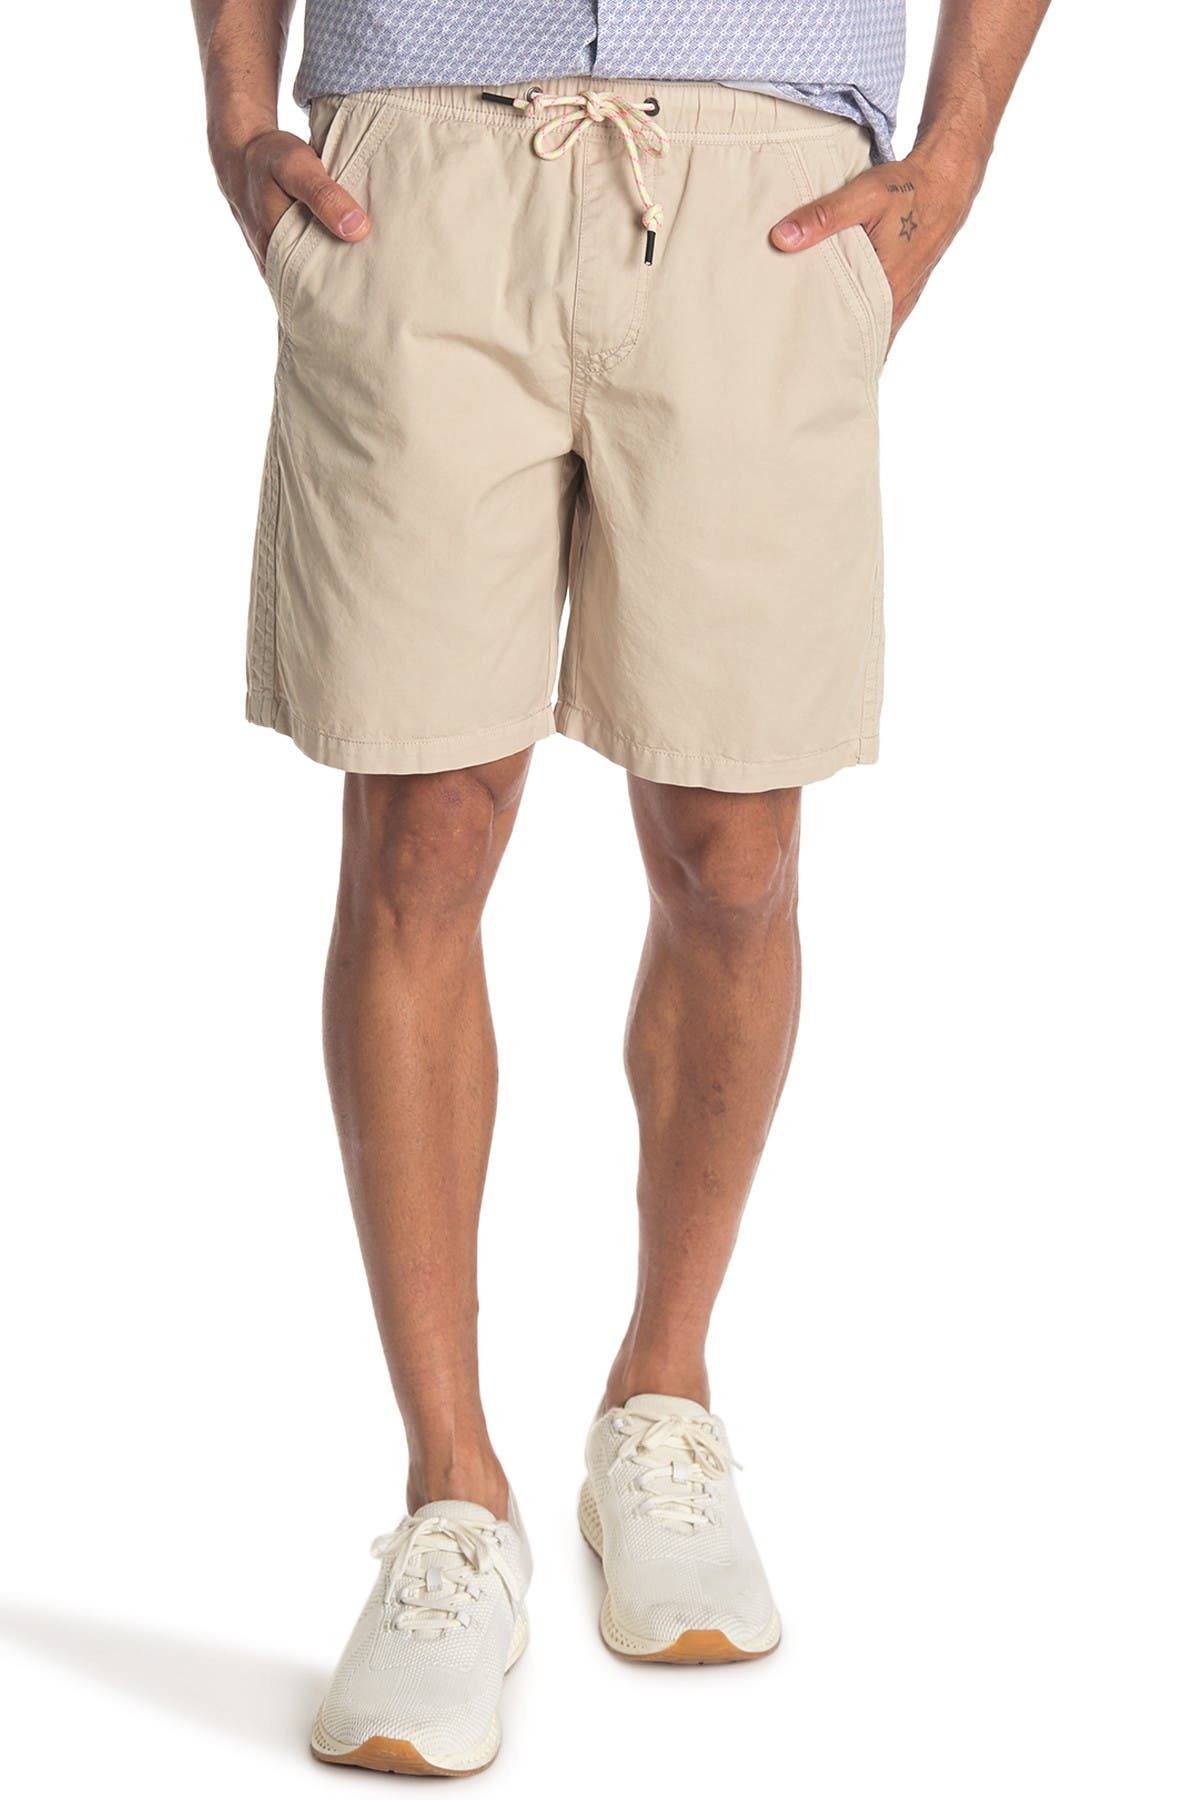 Union Denim Sun-sational Pull-on Woven Shorts In Light Beige2